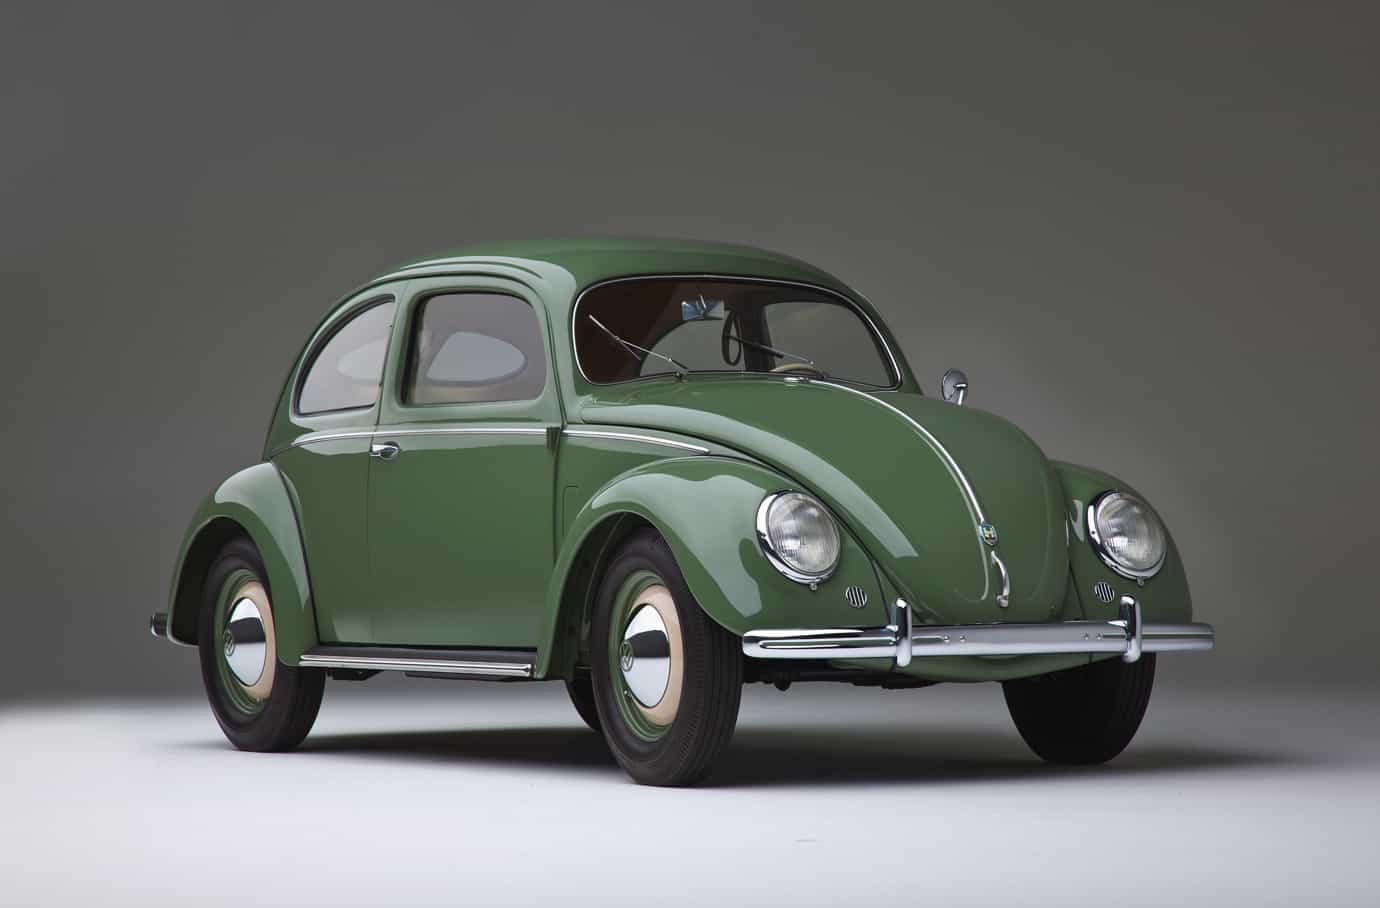 Classic Volkswagen Beetle - Evaluation, Appraisal, and Buyers